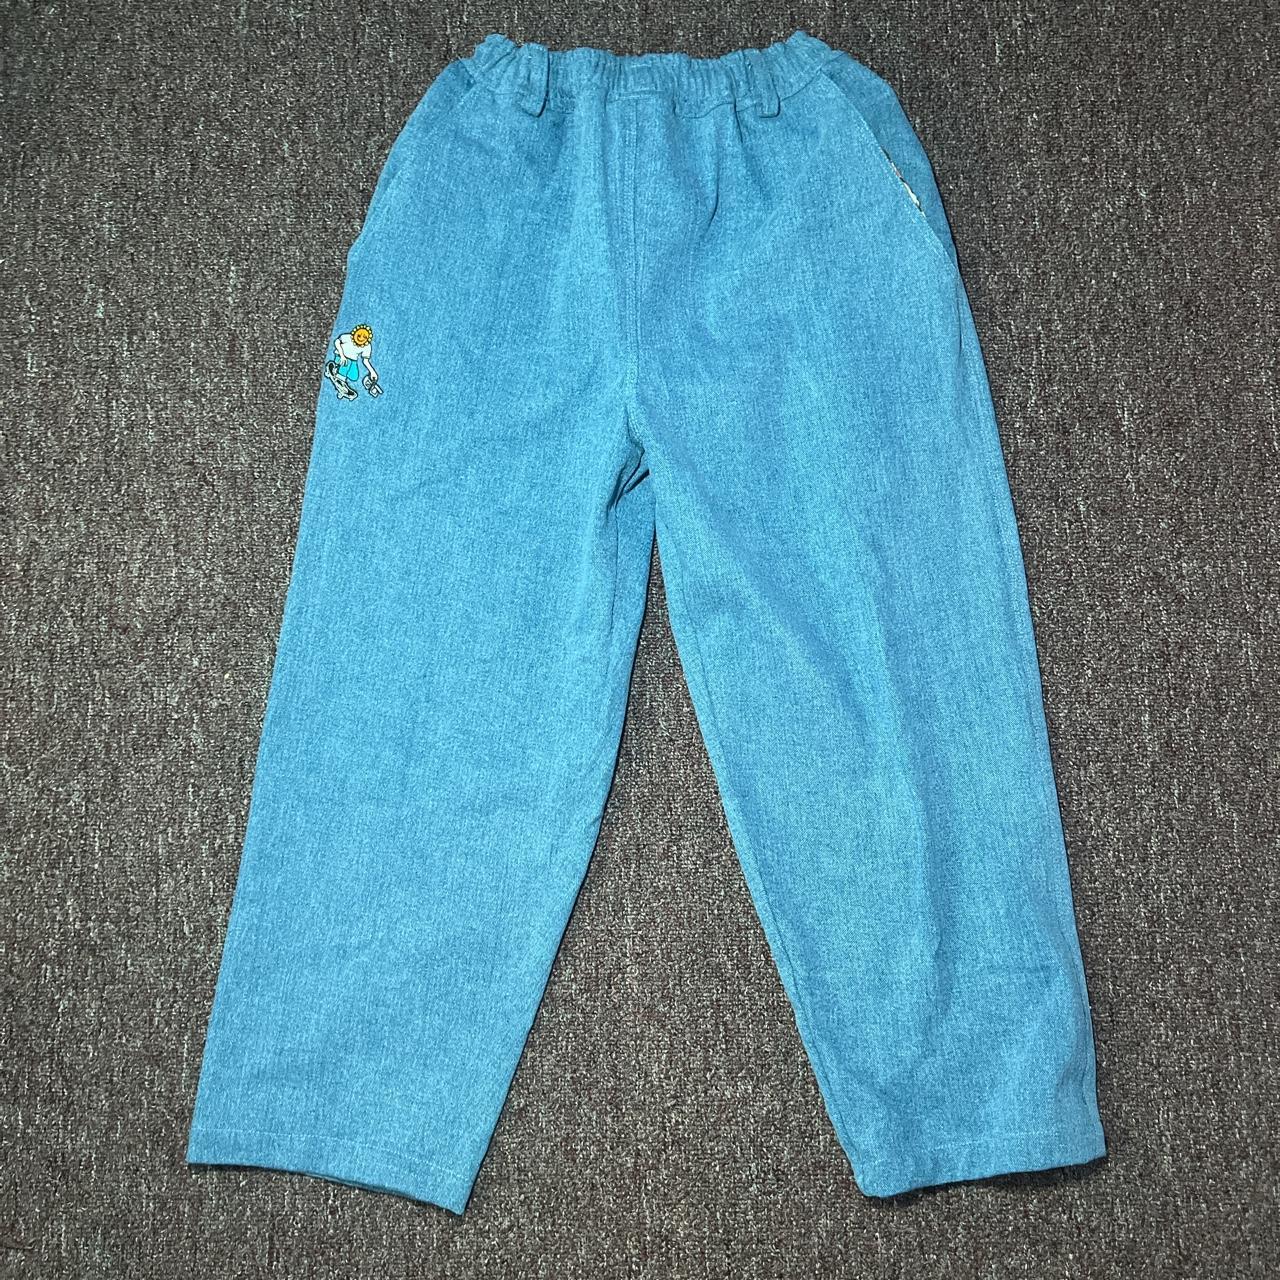 Televisistar Ocean Blue Denim Pants Size Small - Depop